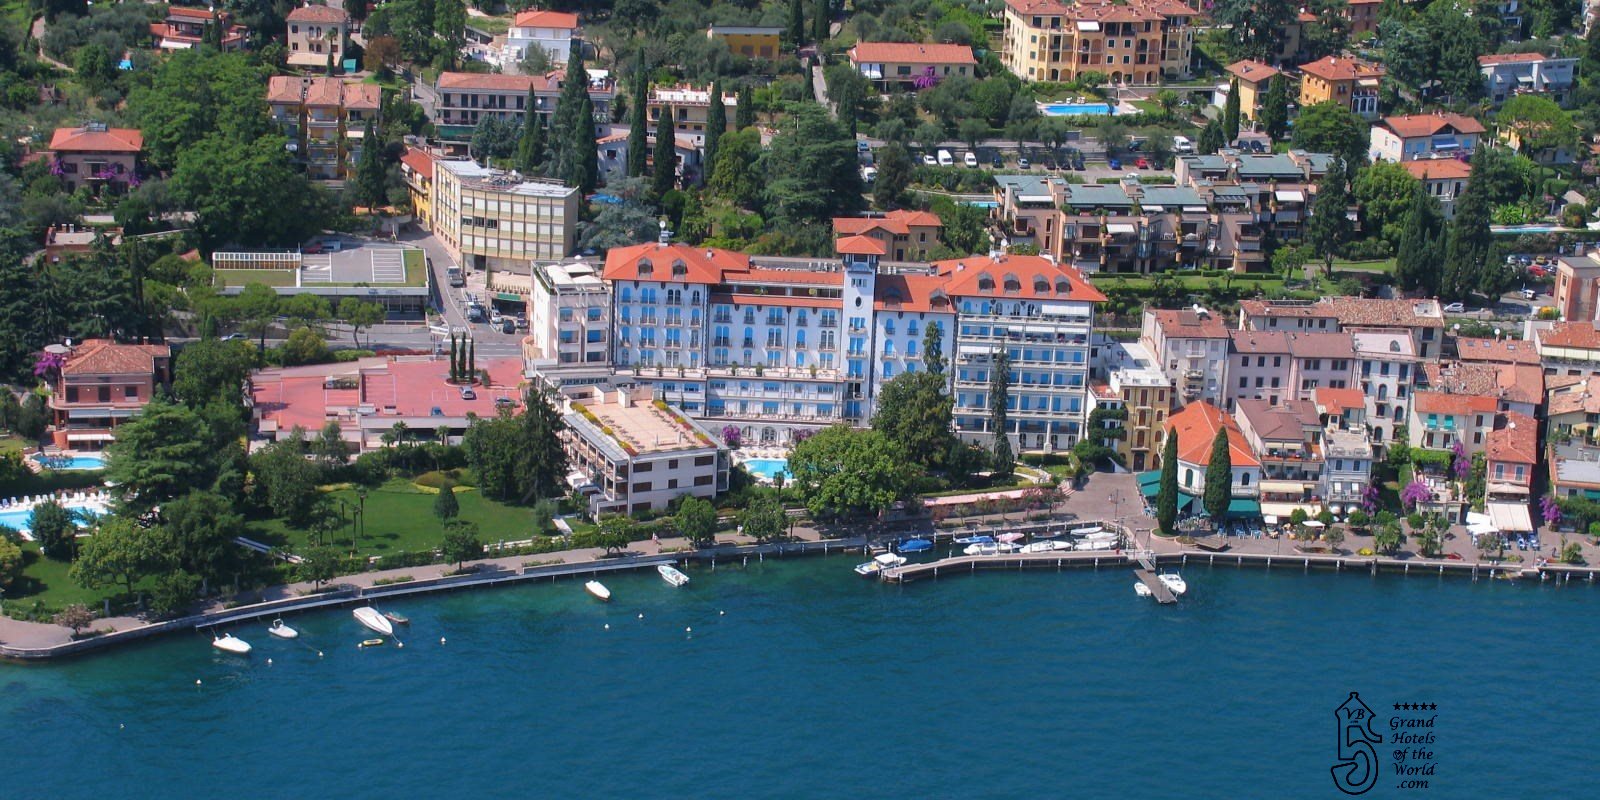 Savoy Palace in Gardone Riviera